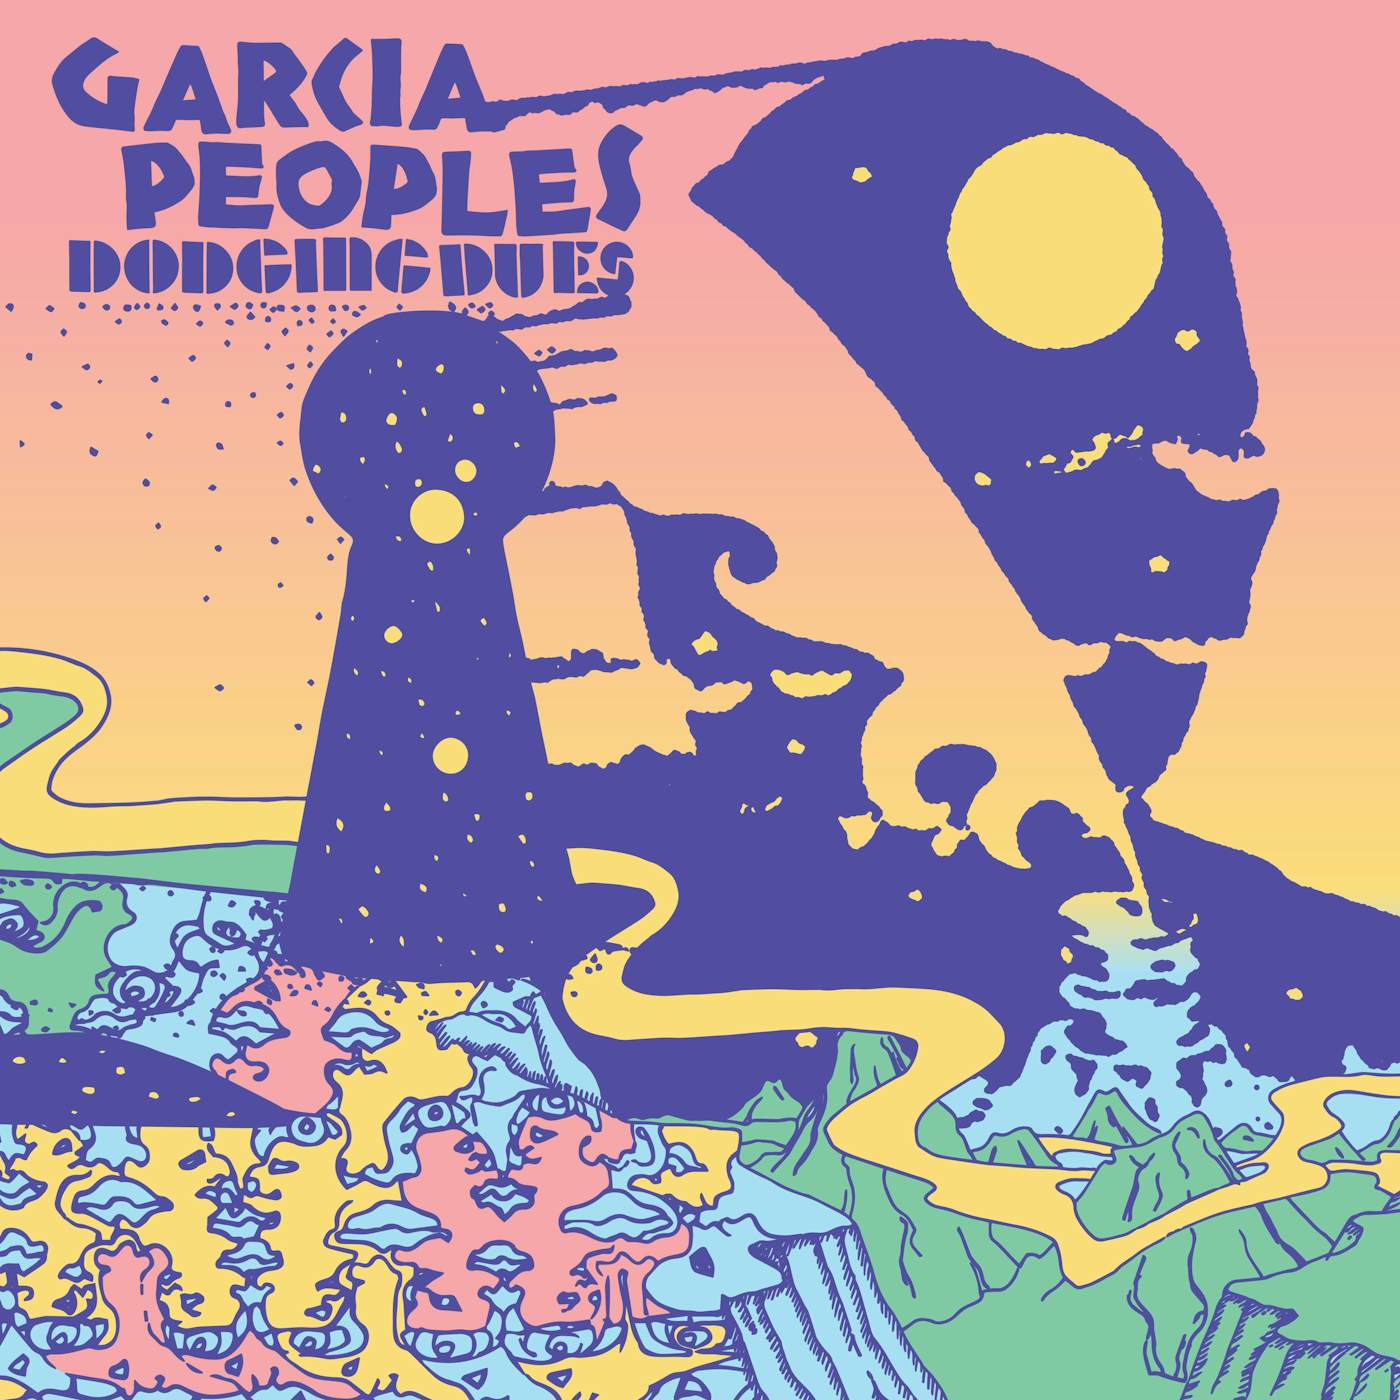 Garcia Peoples DODGING DUES CD